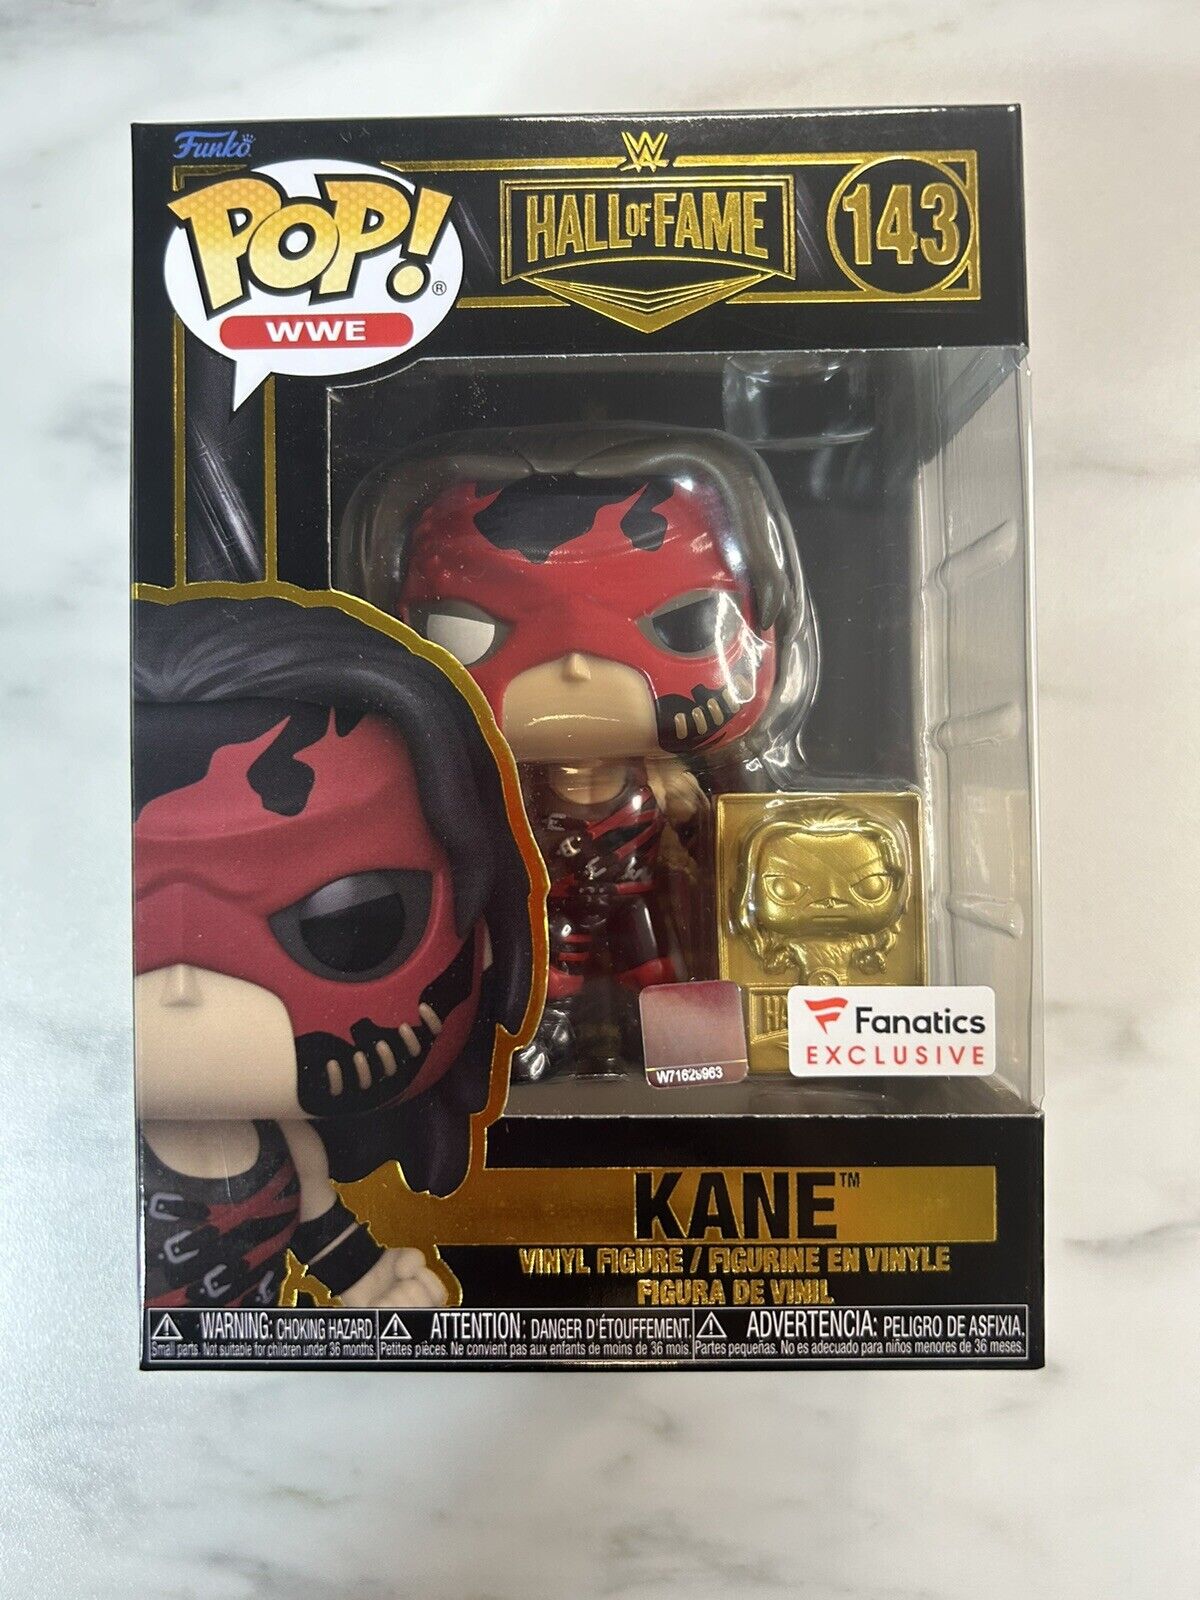 Kane Funko Pop 143 WWE Hall of Fame Fanatics Exclusive Figure /5000